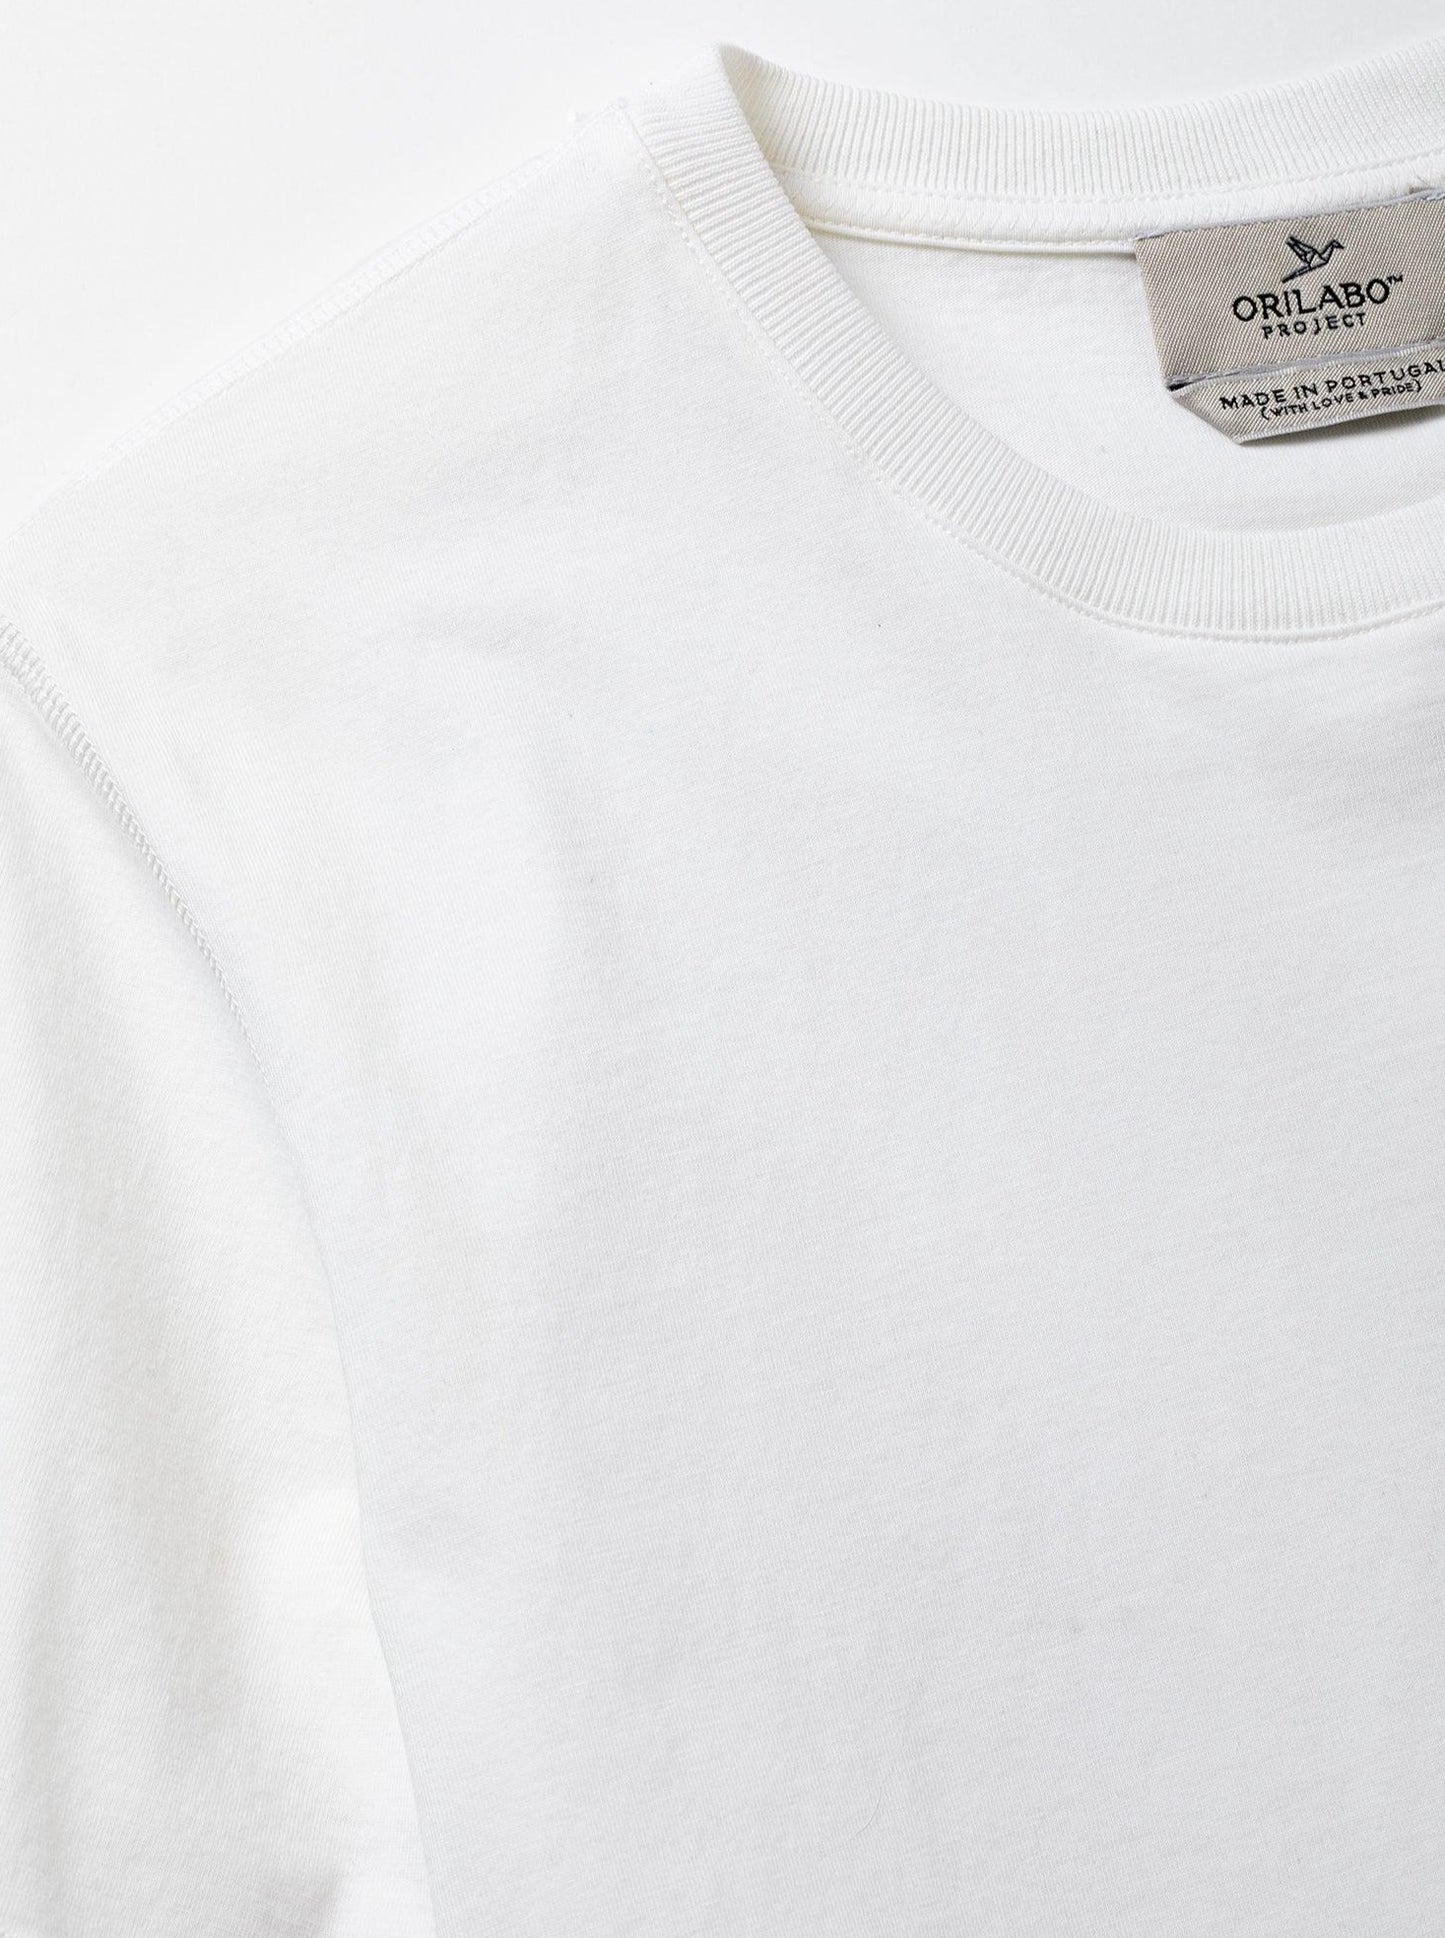 
                  
                    Women's Daisy T-shirt - White - ORILABO Project
                  
                